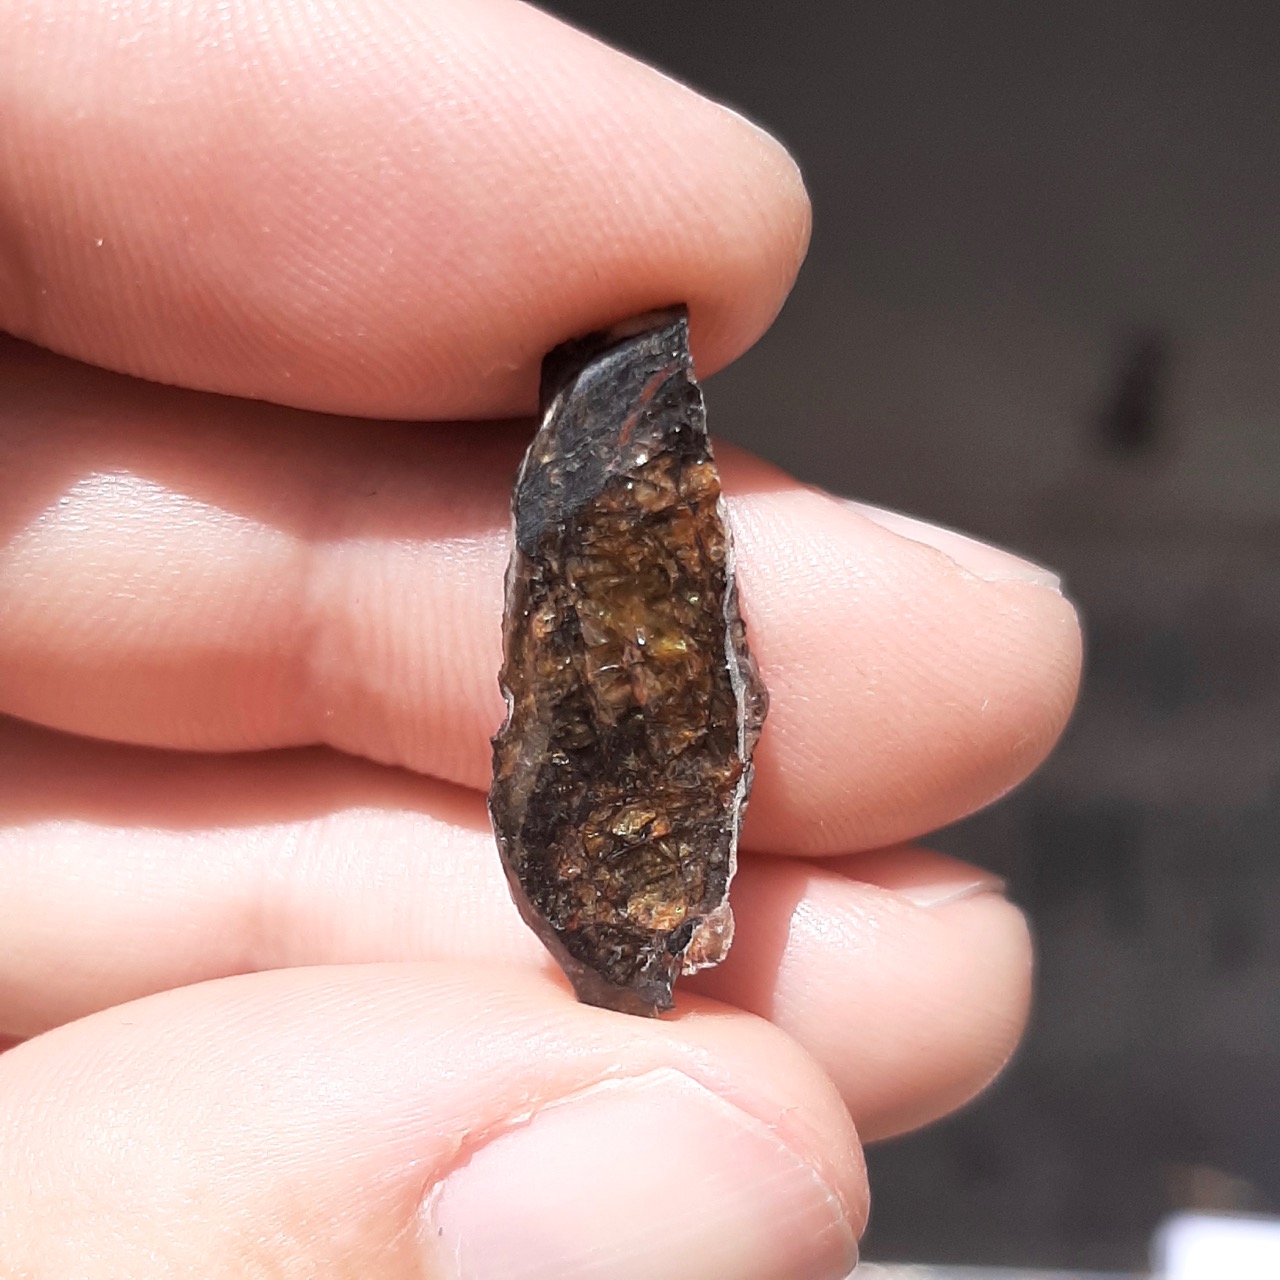 Jepara pallasite meteorite. Small slice.